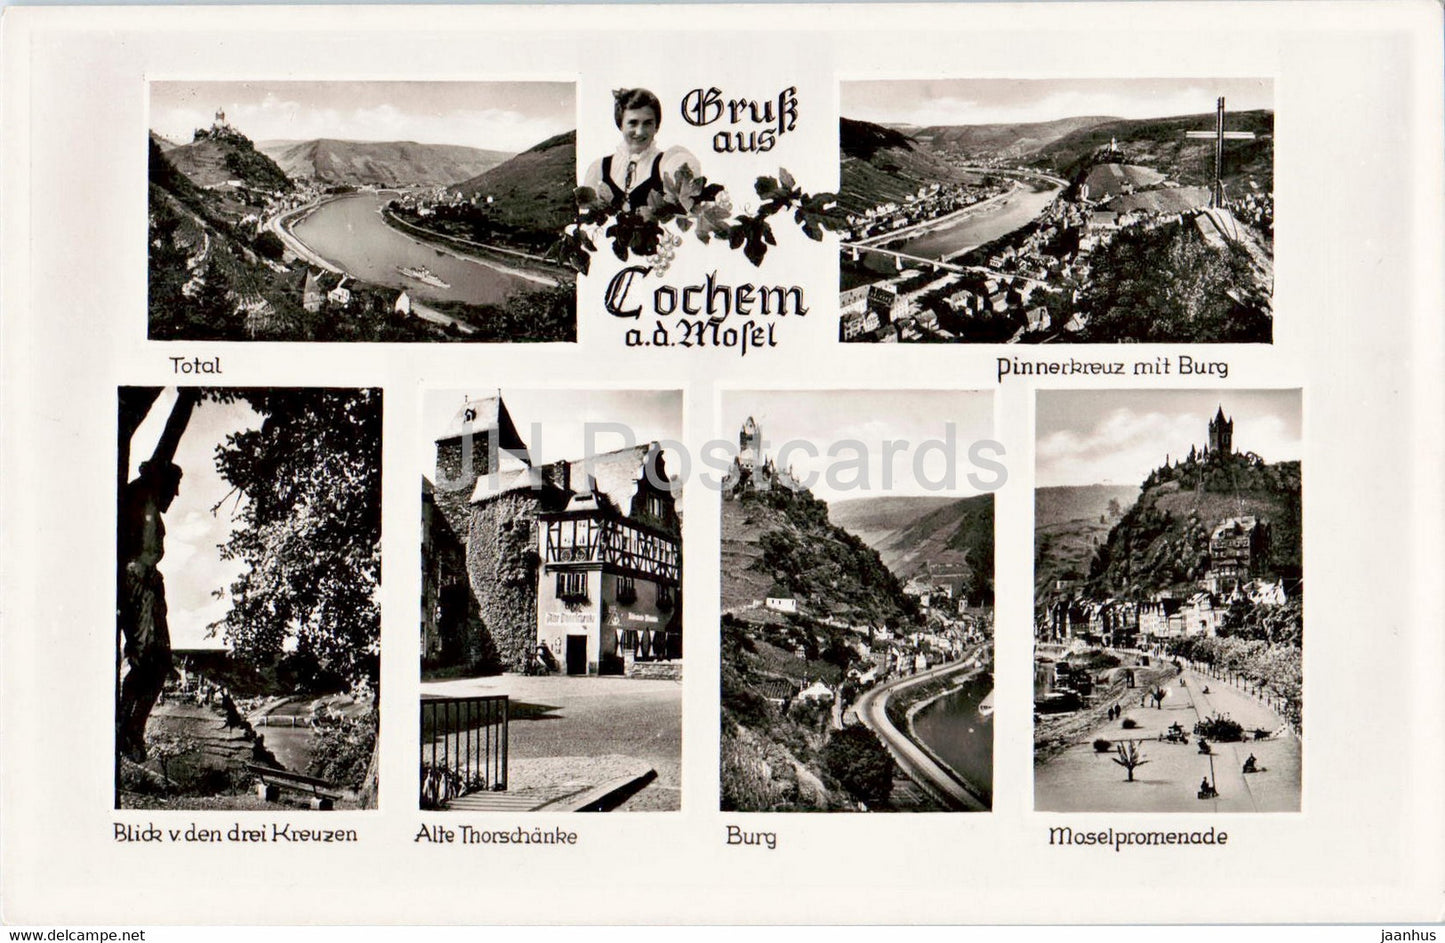 Gruss aus Cochem a d Mosel - Pinnerkreuz mit Burg - Alte Thorschanke - Moselpromenade - old postcard - Germany - unused - JH Postcards